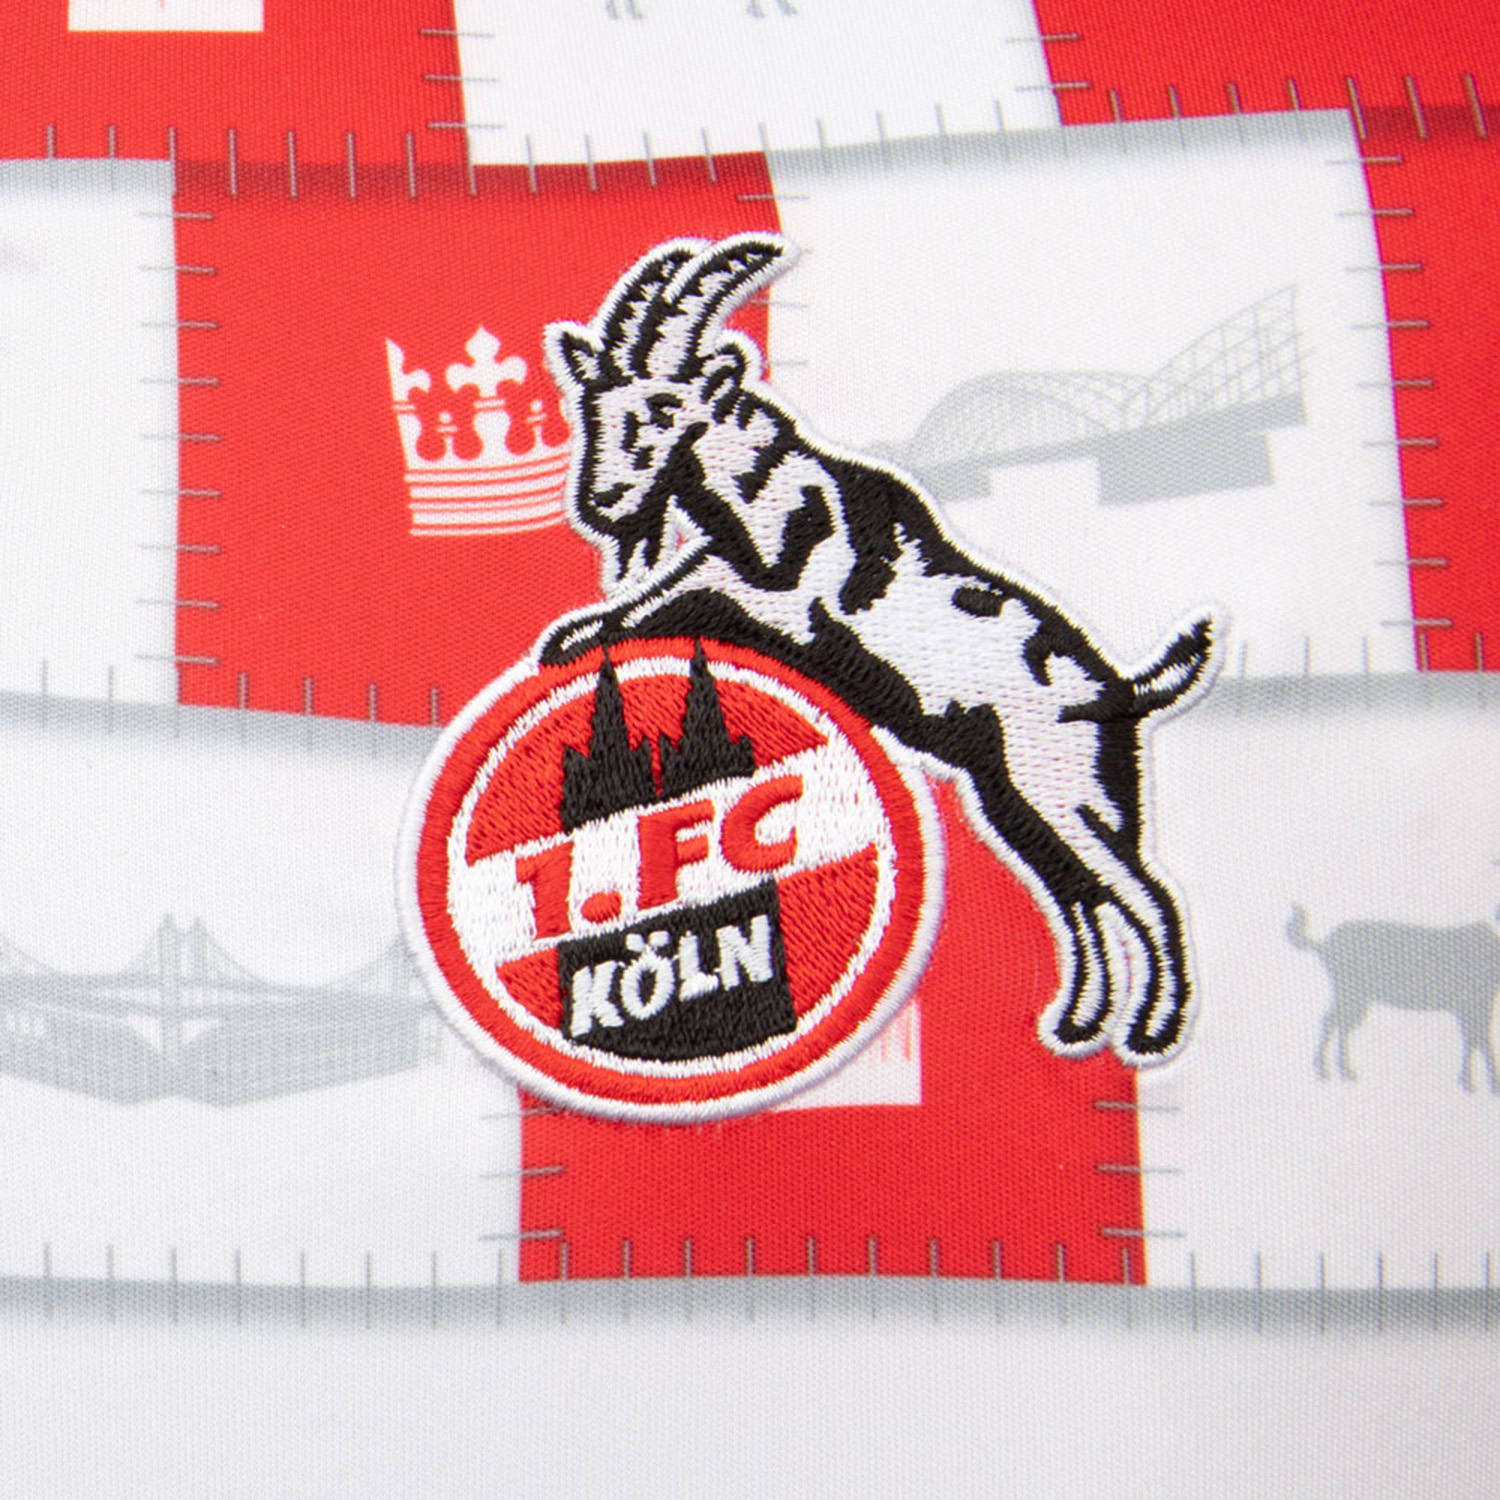 Uhlsport 1.FC Köln Karneval Fastelovend Trikot Shirt 2020/2021